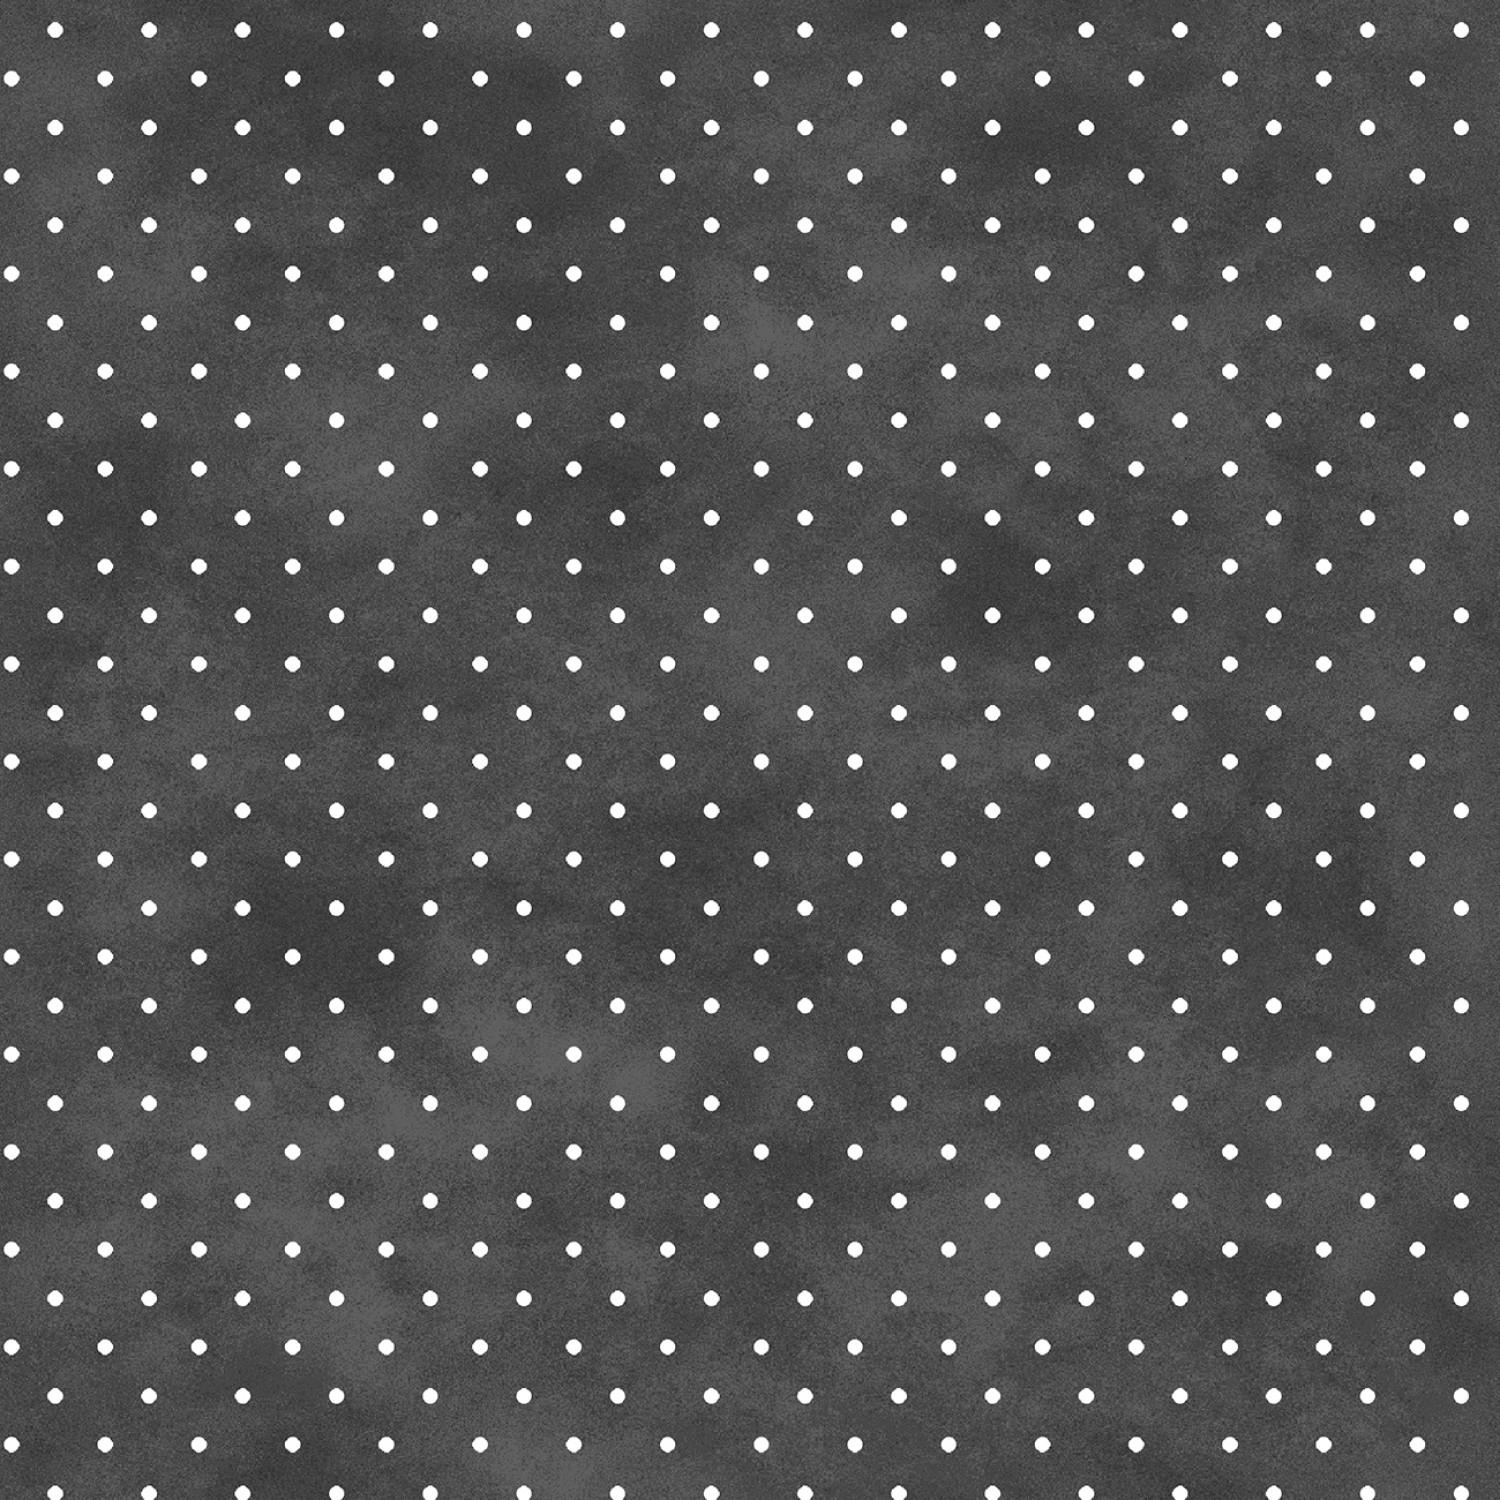 Playtime Flannel - Tiny Dot - Black - MASF10690-J